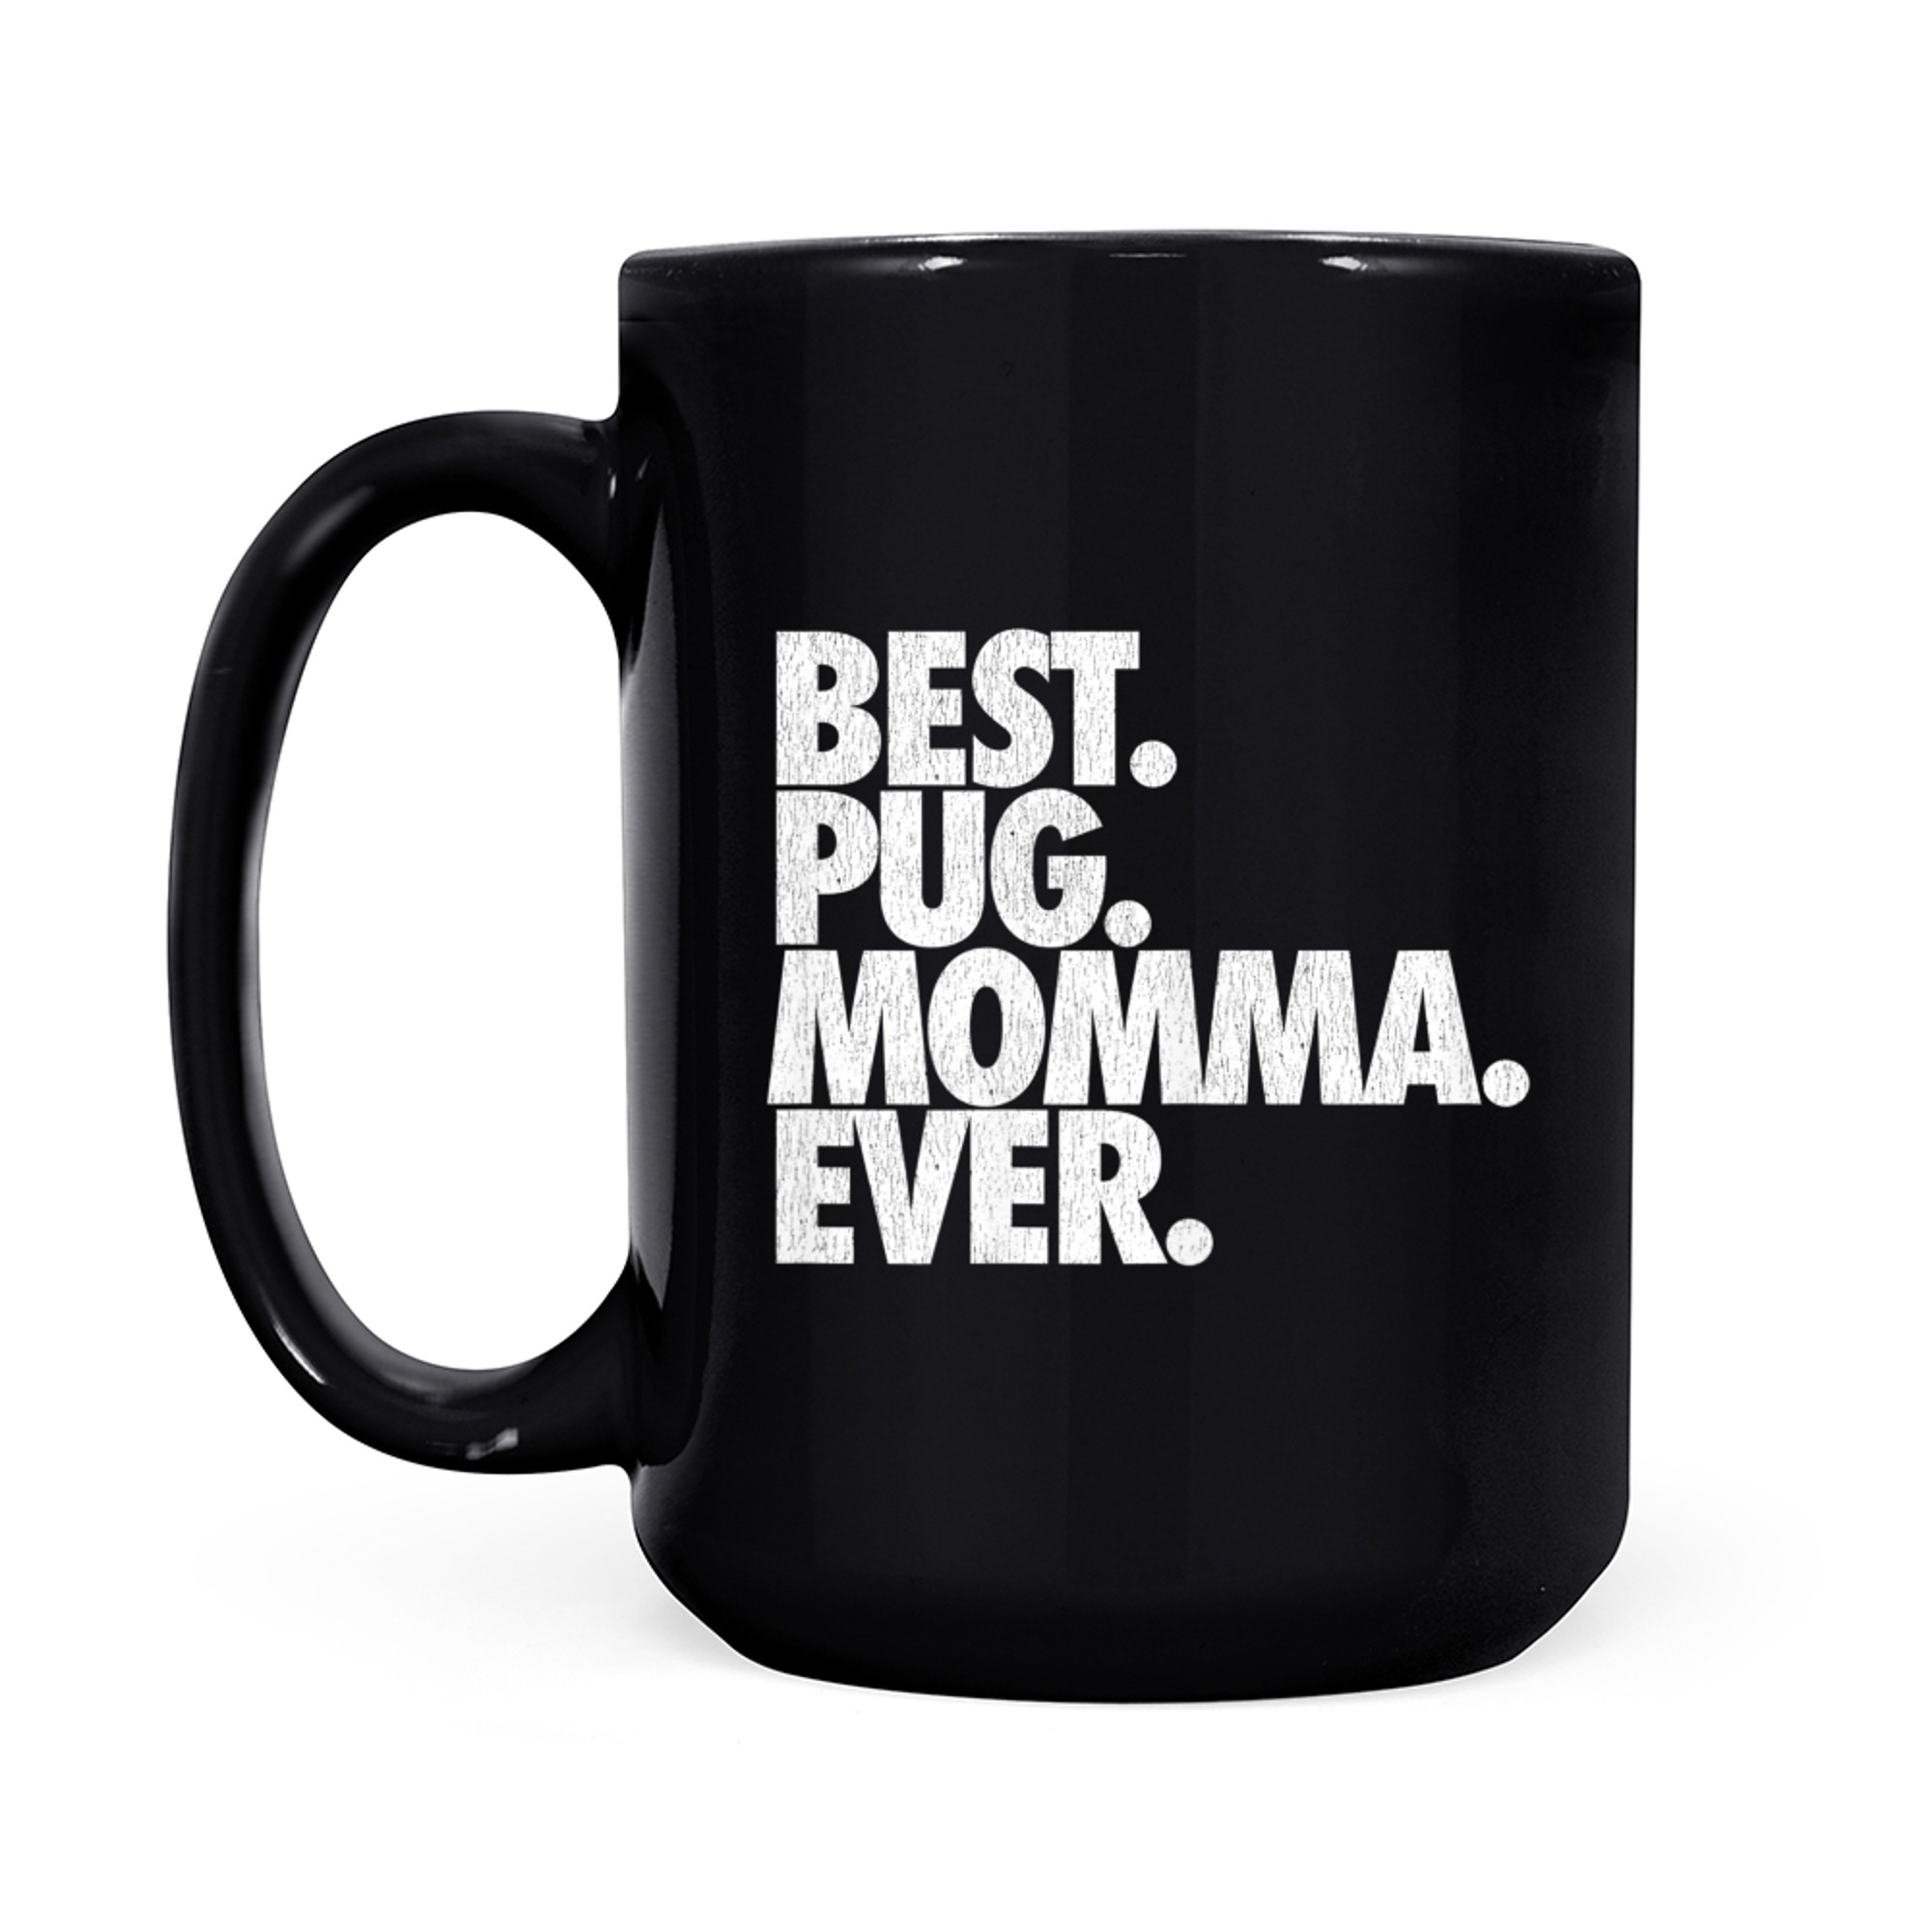 Best Pug Momma Ever - Cute Pug Mom Dog Gift mug black